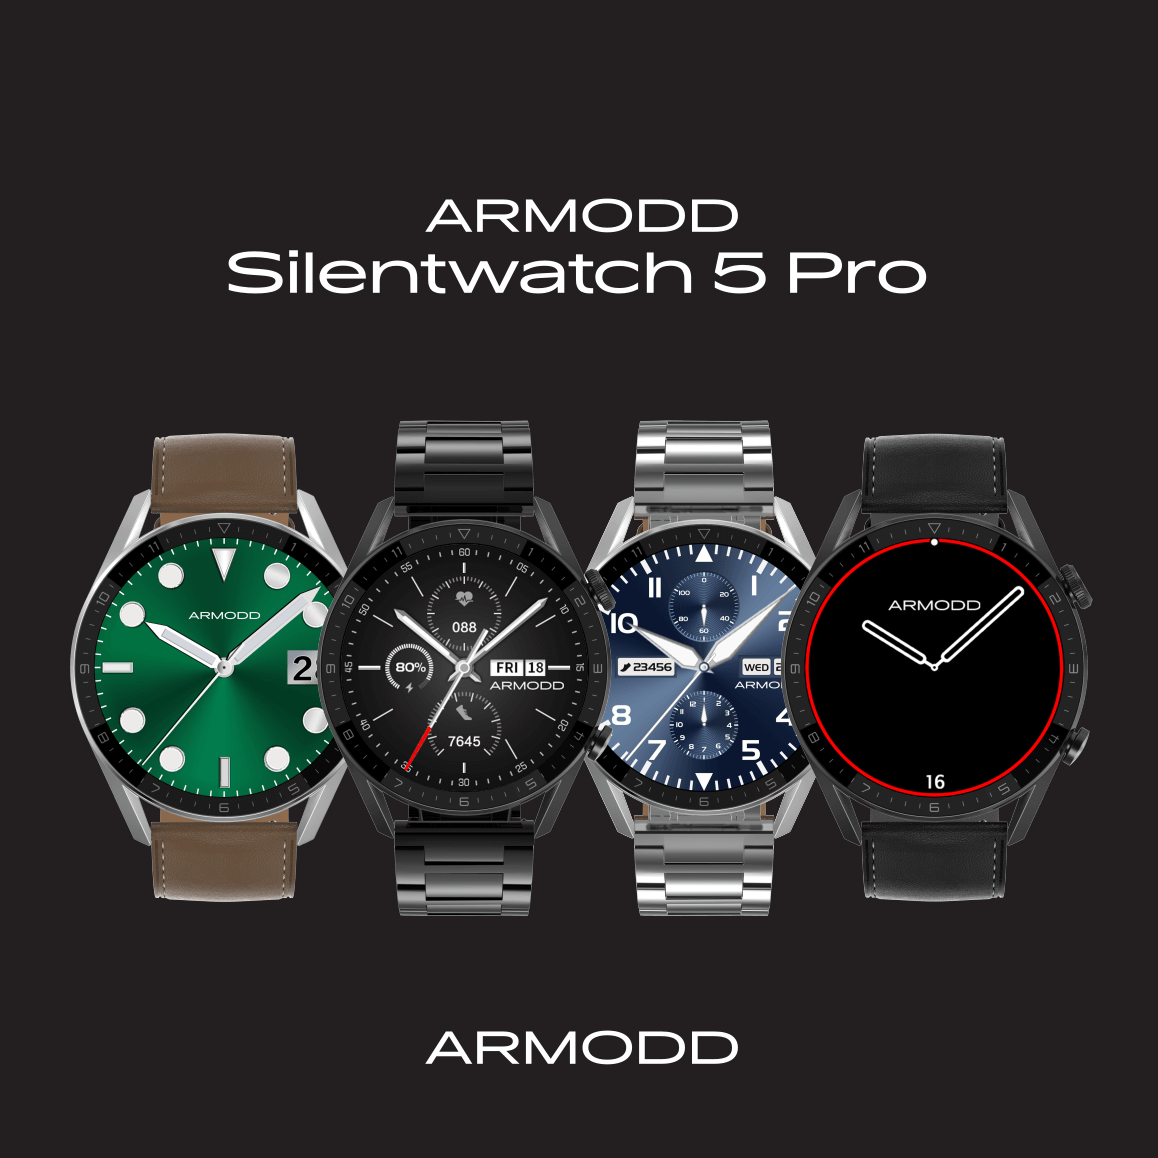 ARMODD SIlentwatch 5 Pro box